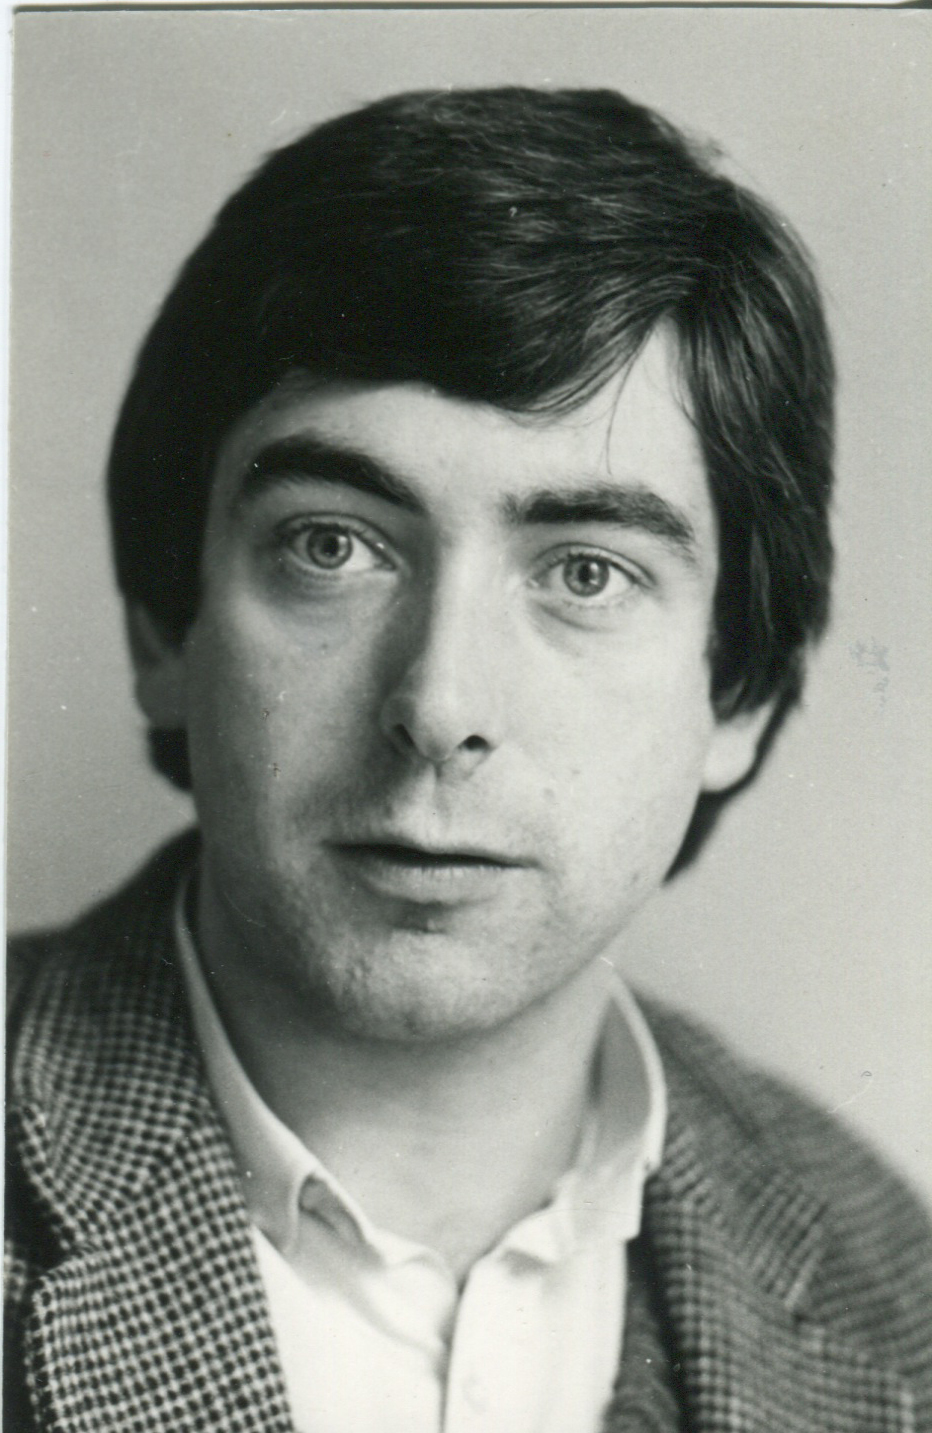 Alex when he joined RTE in 1984